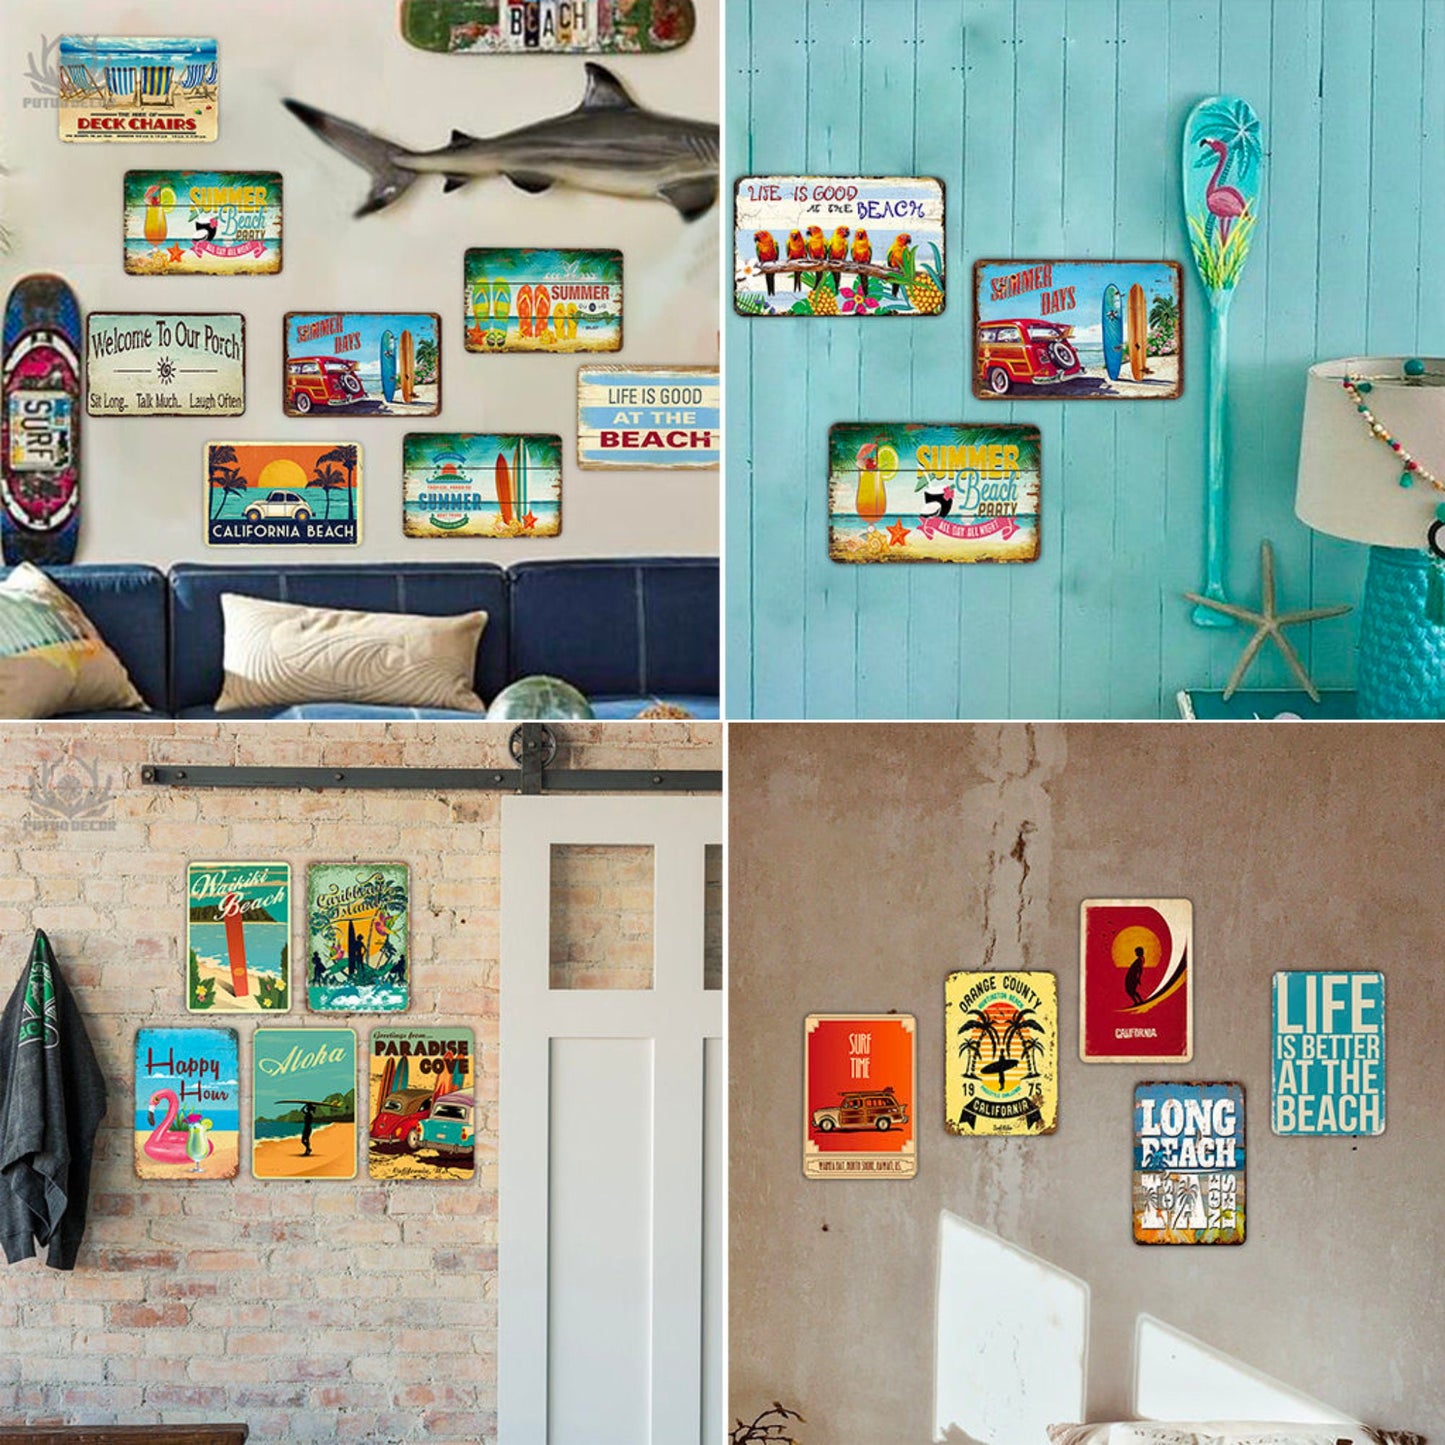 Summer Beach Tin Sign | Vintage Surfing Metal Plaque | Seaside Surfboard Decorative HD Print Wall Hanging Decor for Surf Bar Beach House | Papagaio Studio Etsy Shop